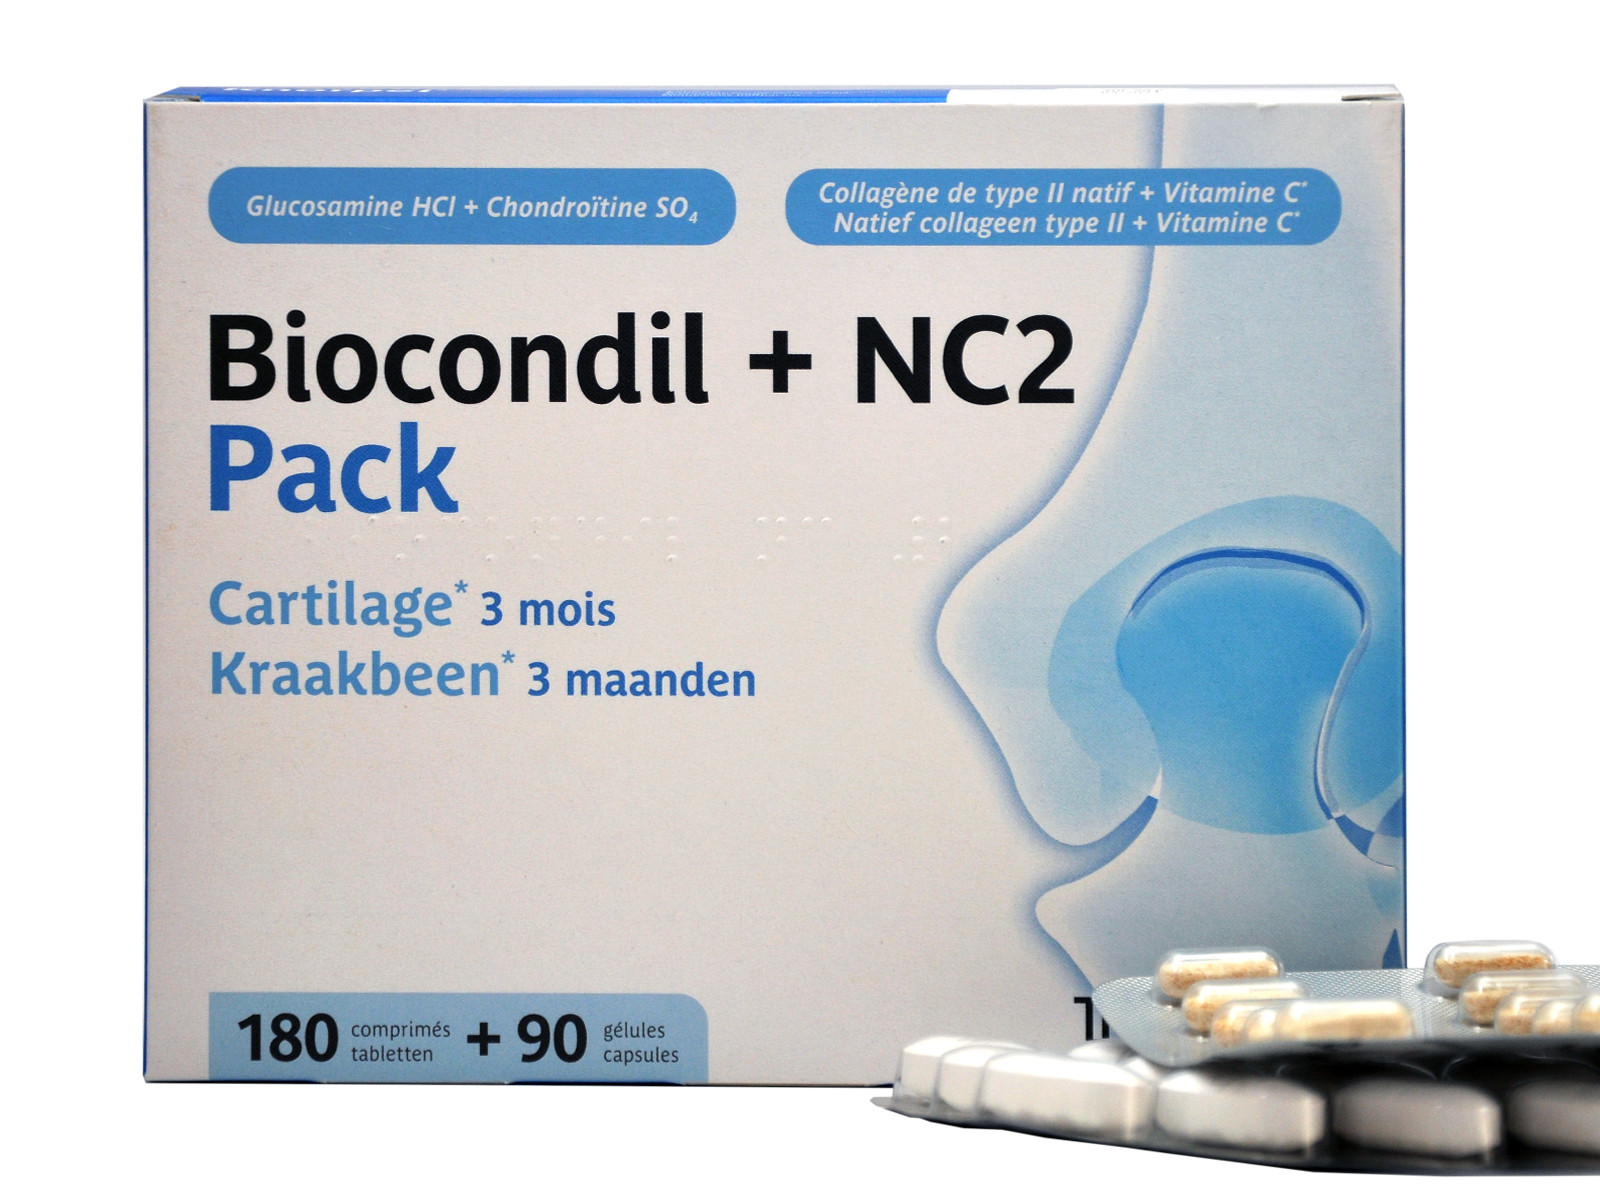 Biocondil NC2 pack strips